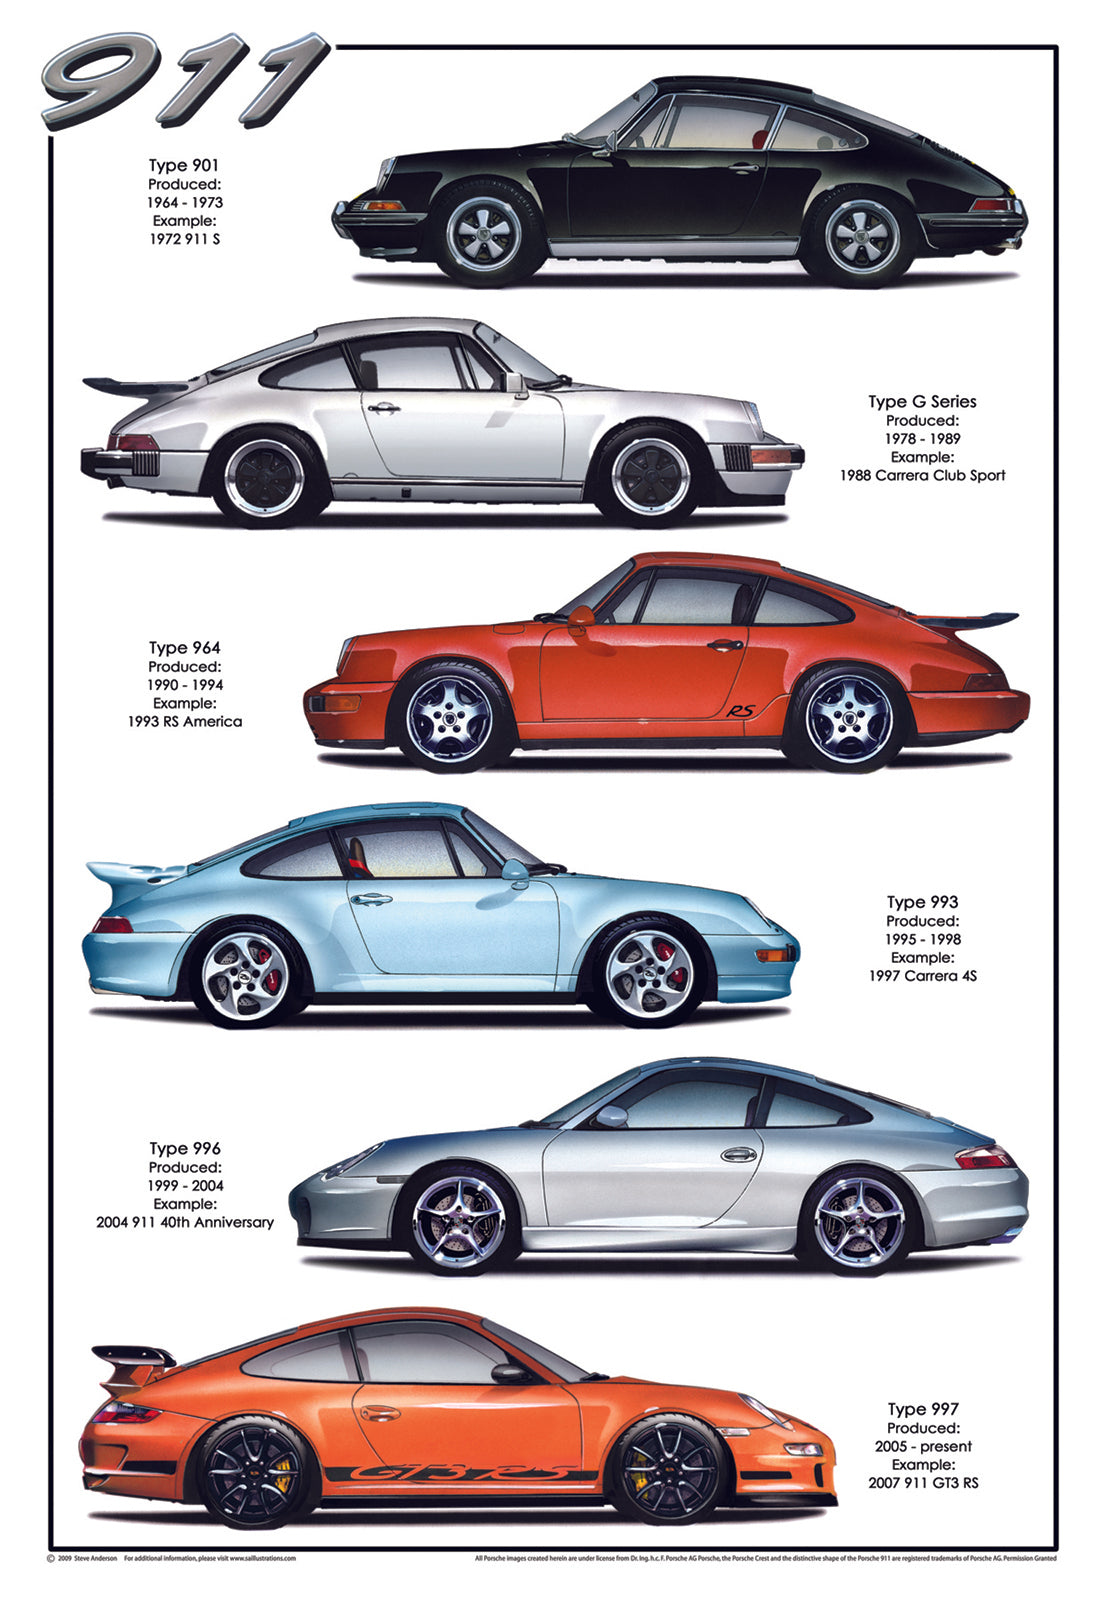 Explore the history of Porsche model names